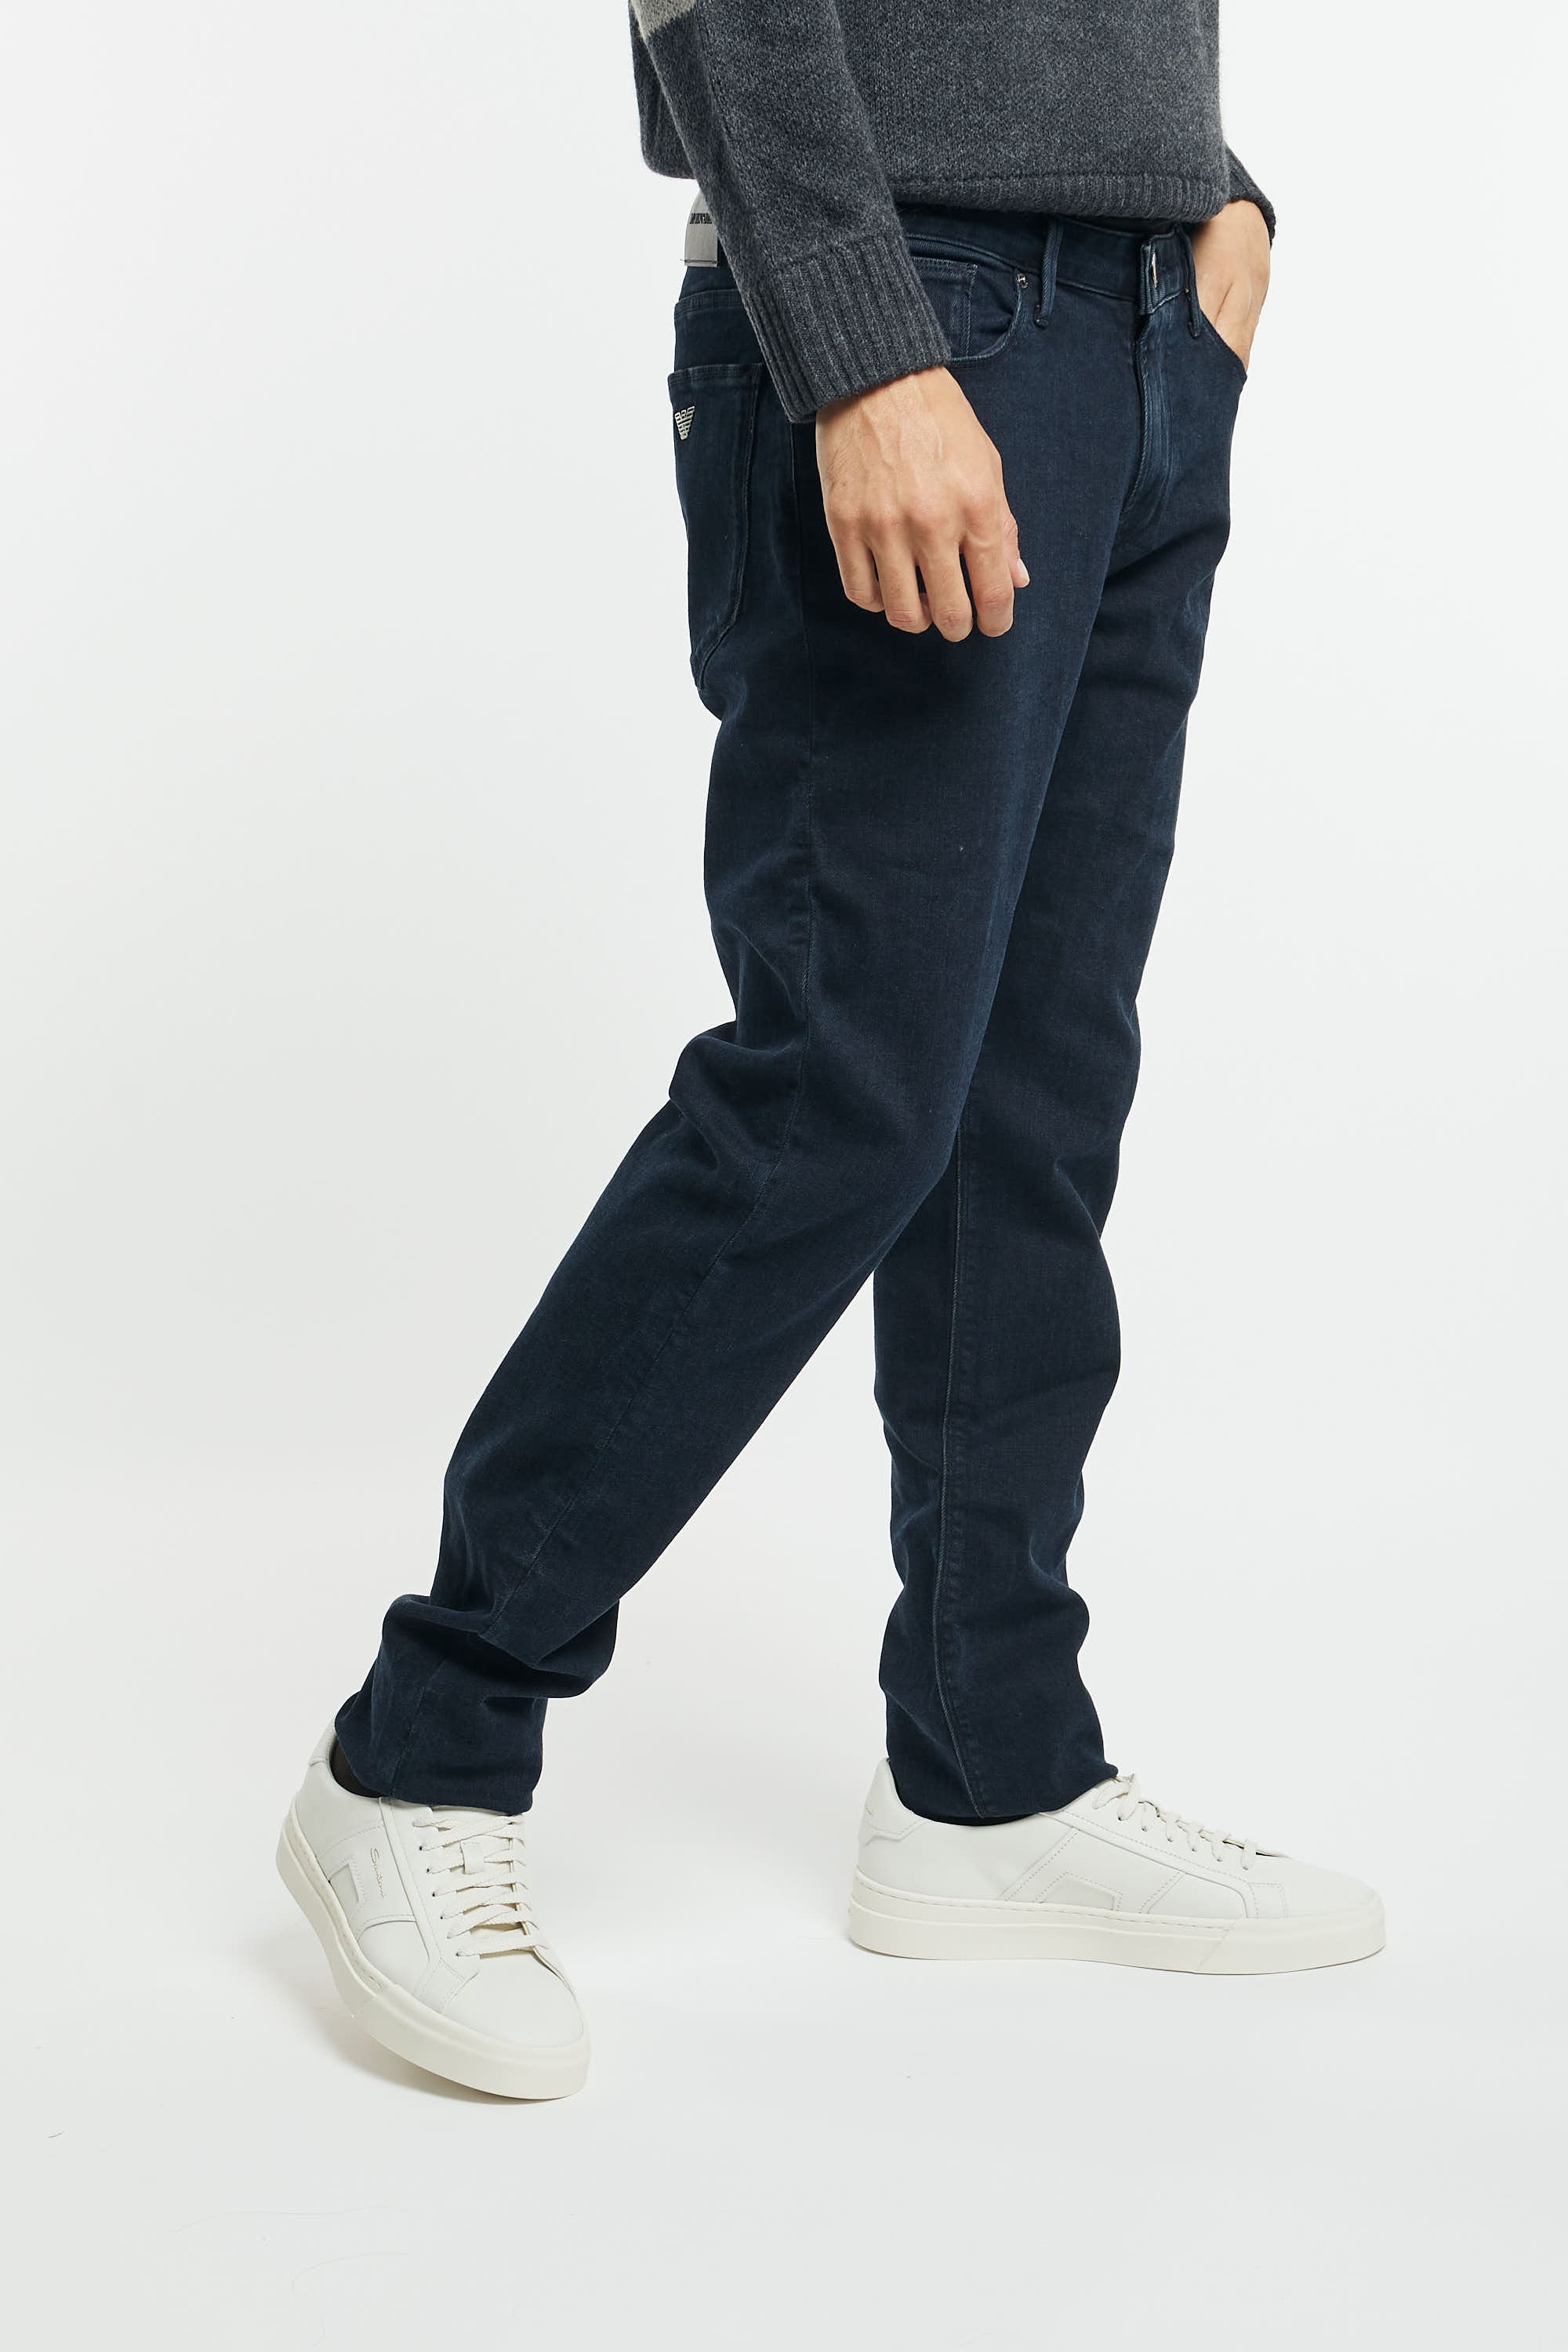 Emporio Armani Jeans J06 Slim Fit in Blue Stretch Cotton Denim-3